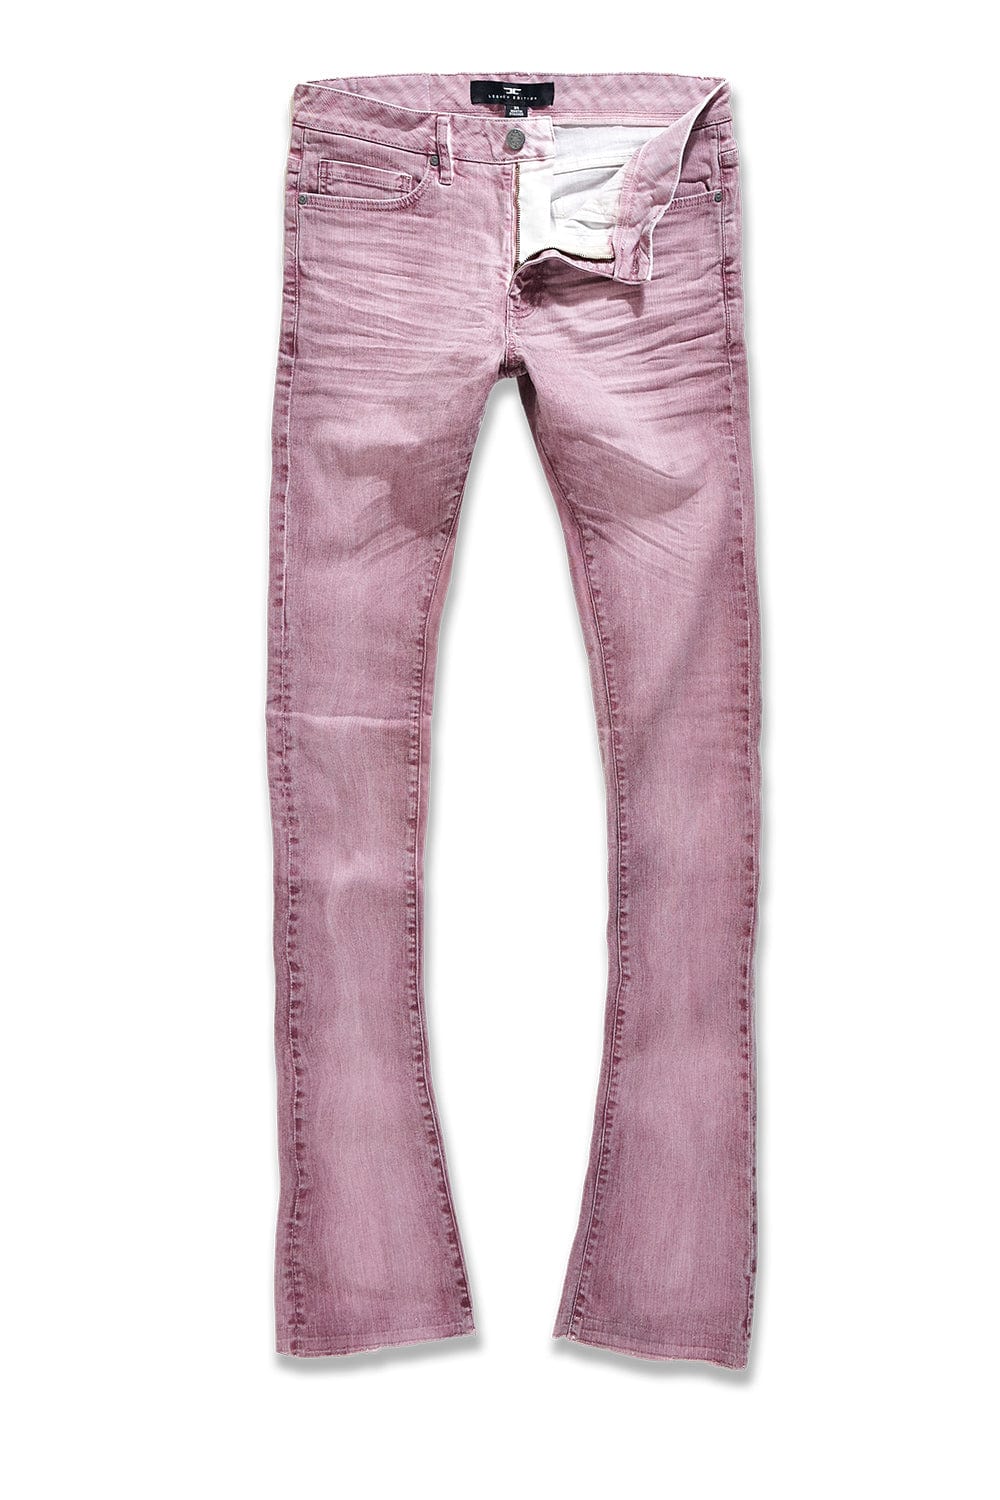 Martin Stacked - Full Bloom Denim Jeans - Mauve Pink